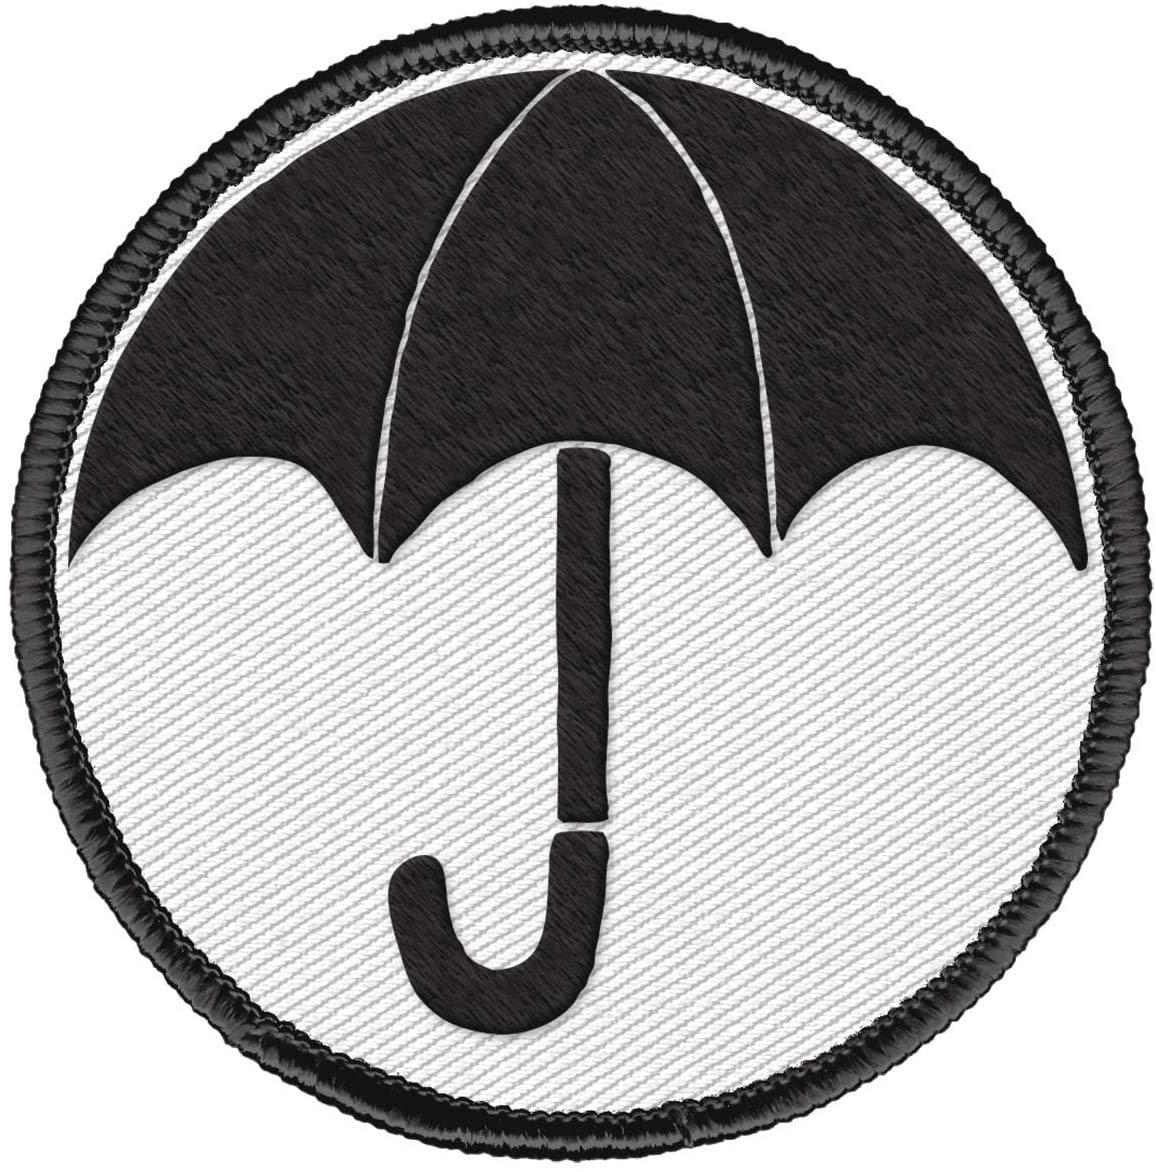 Umbrella Academy Umbrella Logo 2.5 Inch Fabric Patch